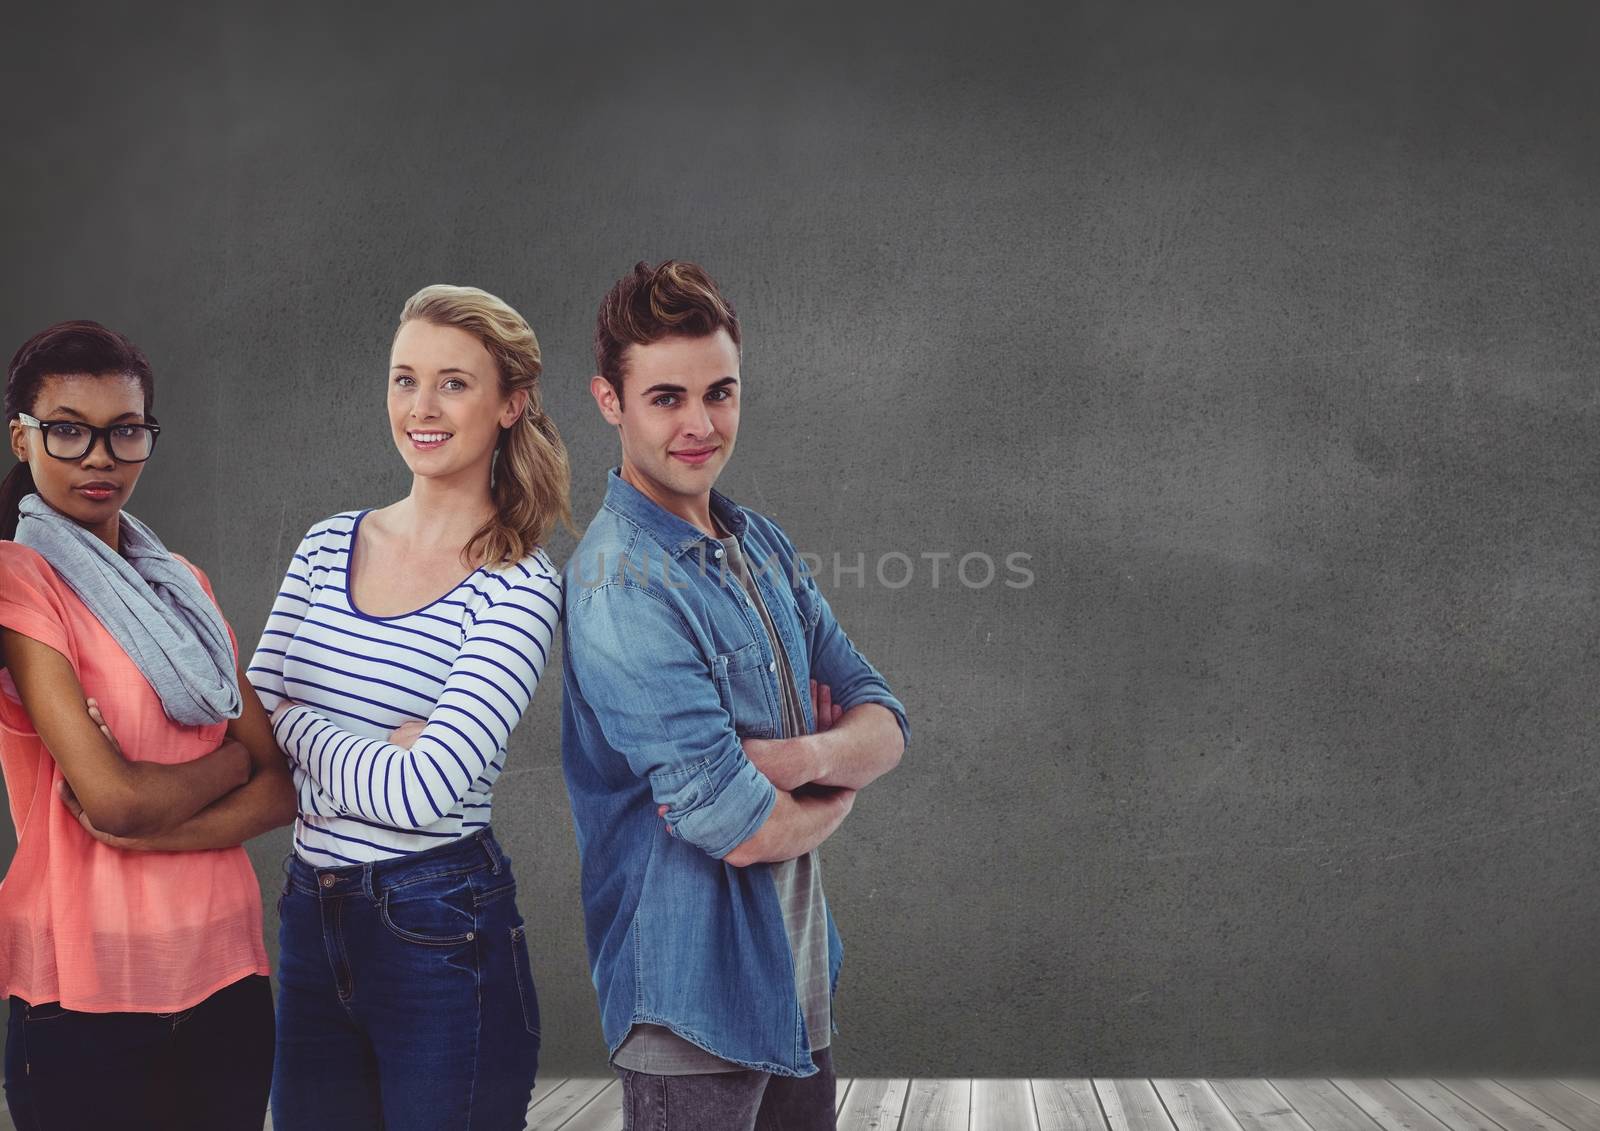 Digital composite of Creative people with blackboard background